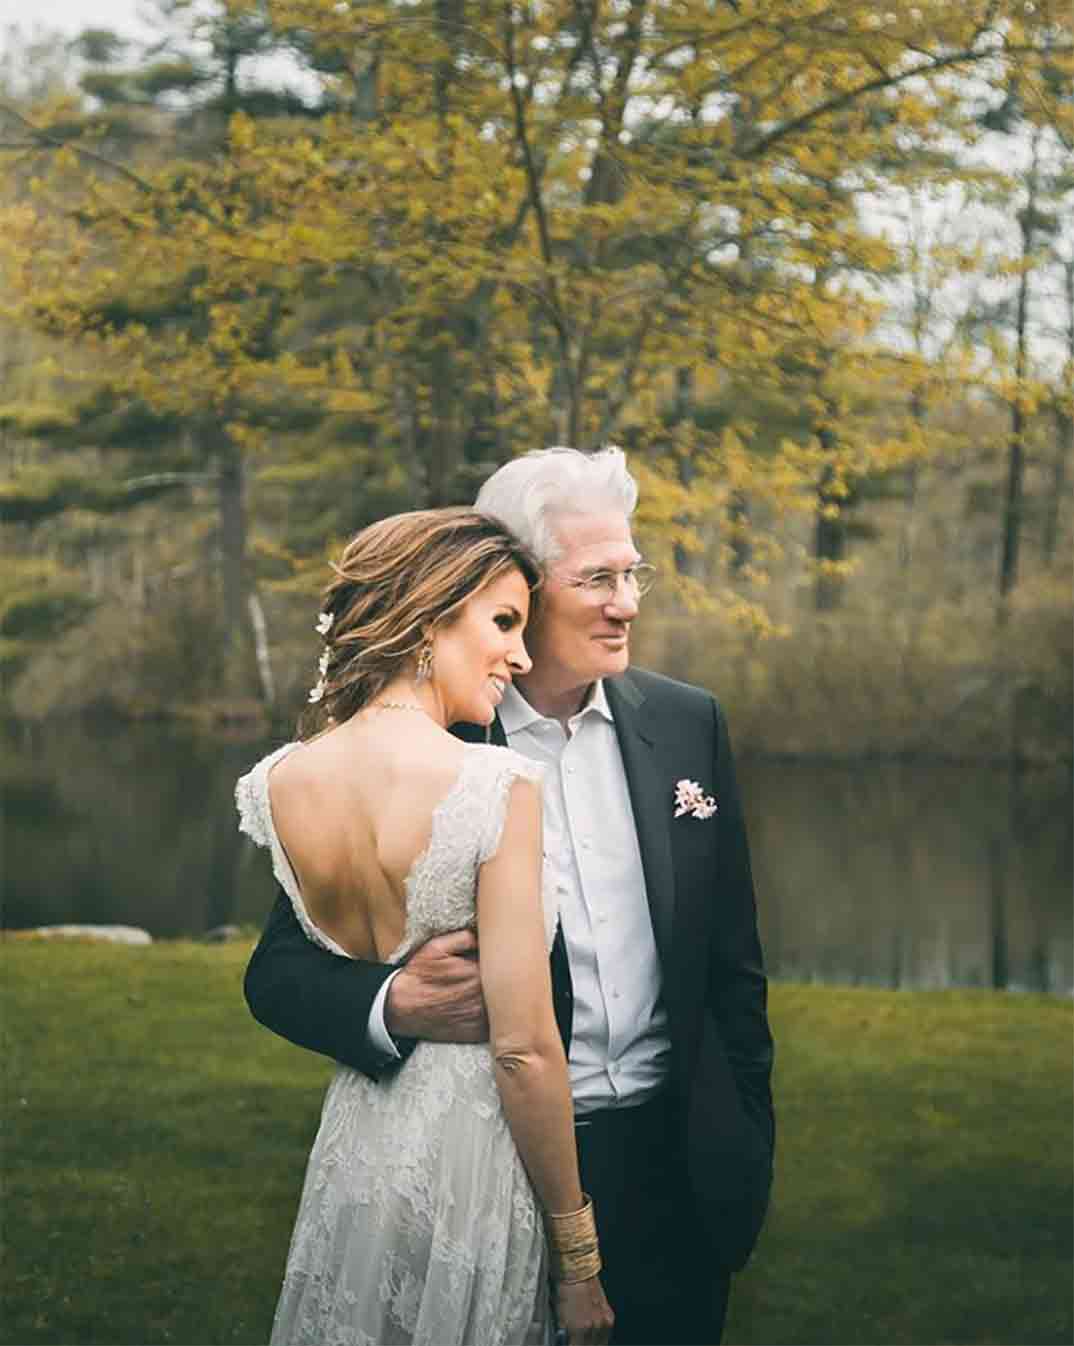 Richard Gere y Alejandra Silva boda 2018 © Instagram